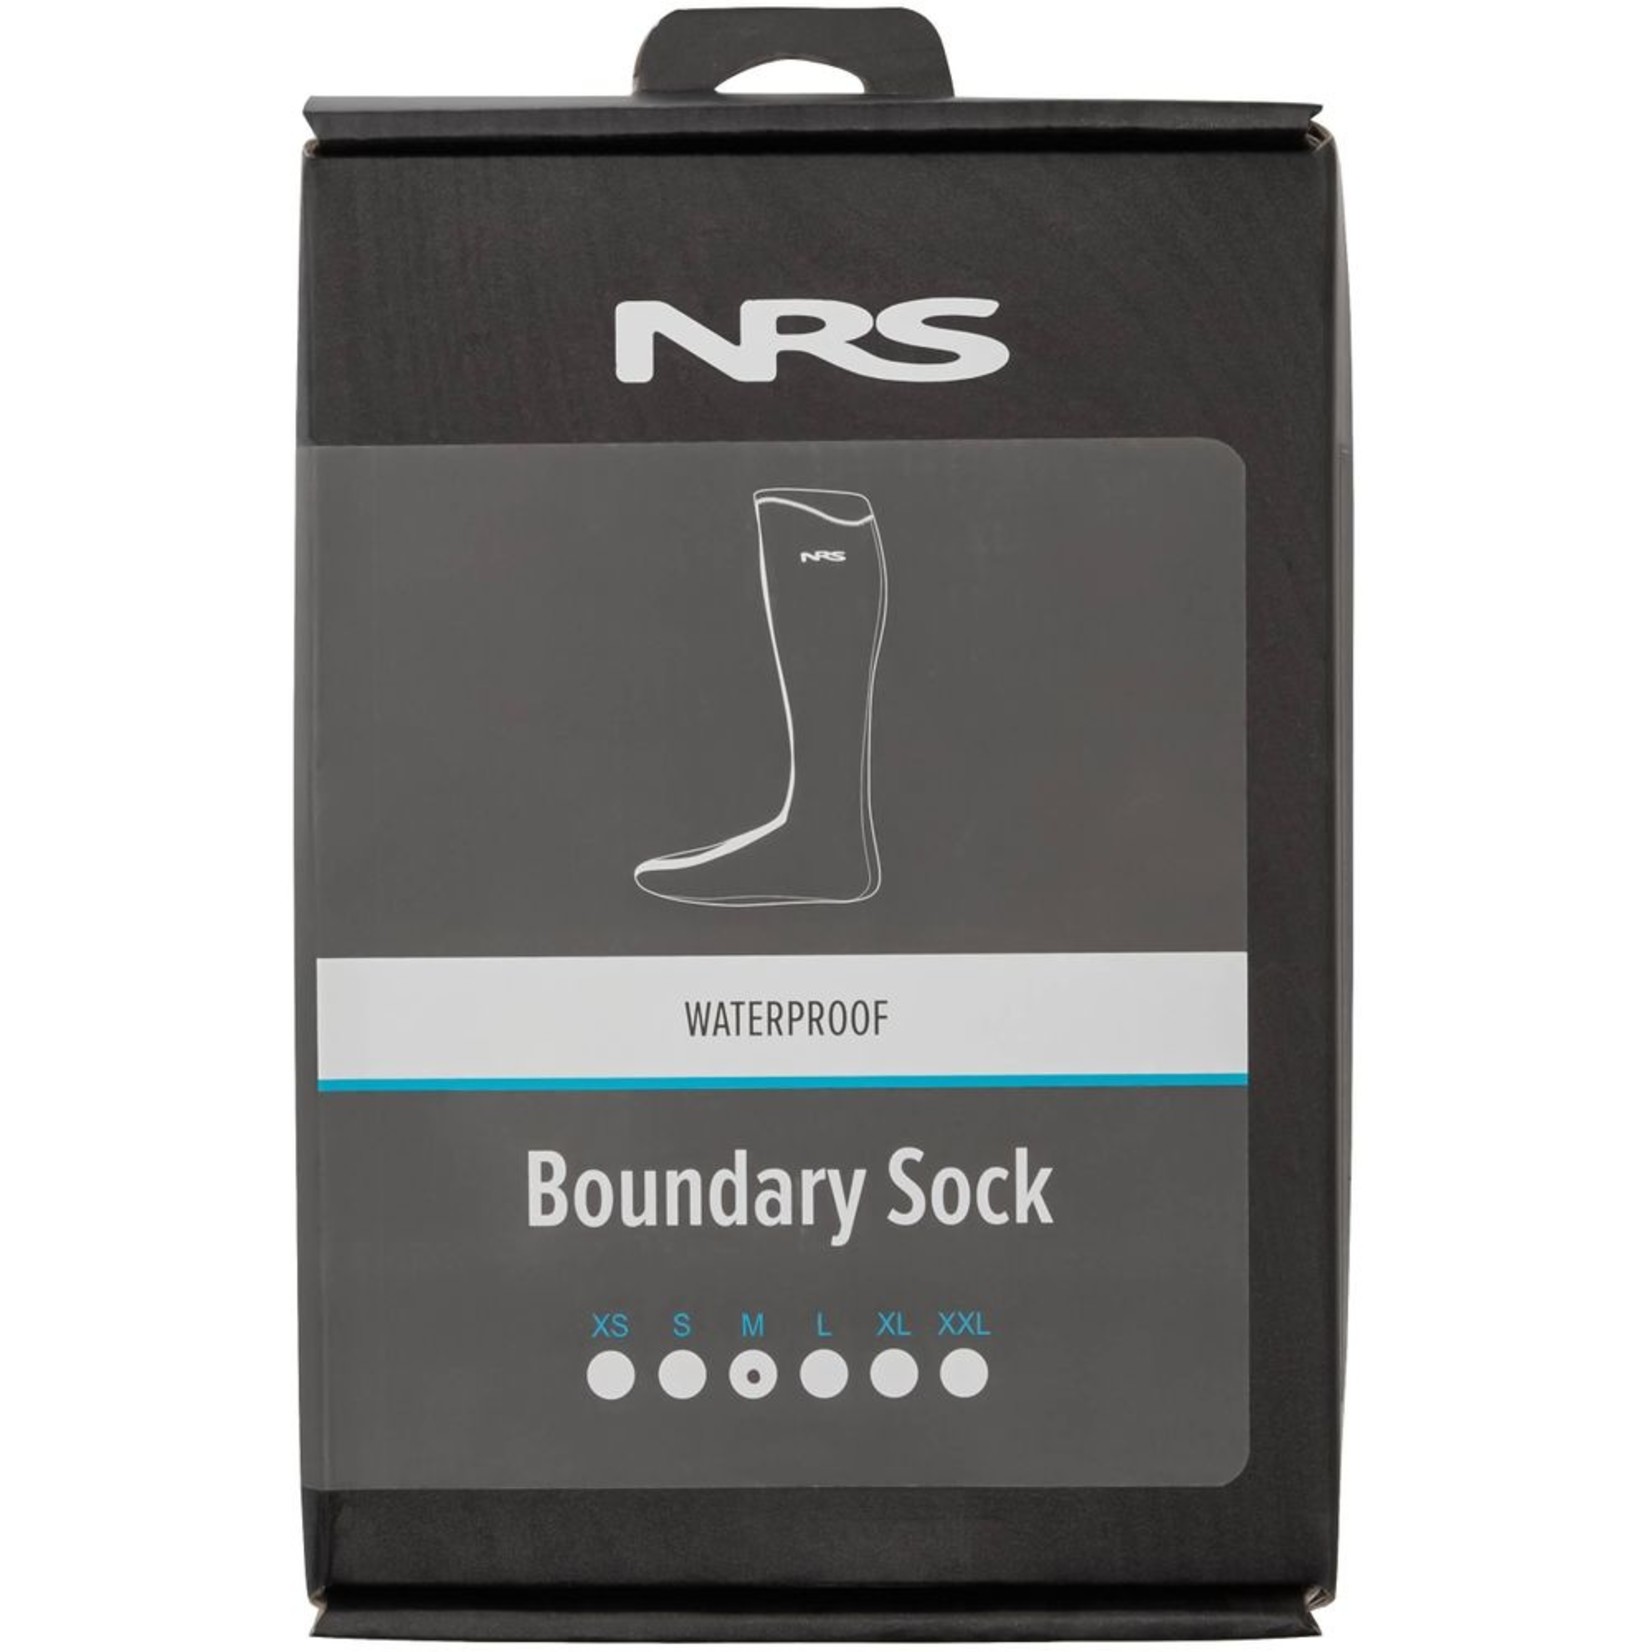 NRS NRS Boundary Socks with HydroCuff